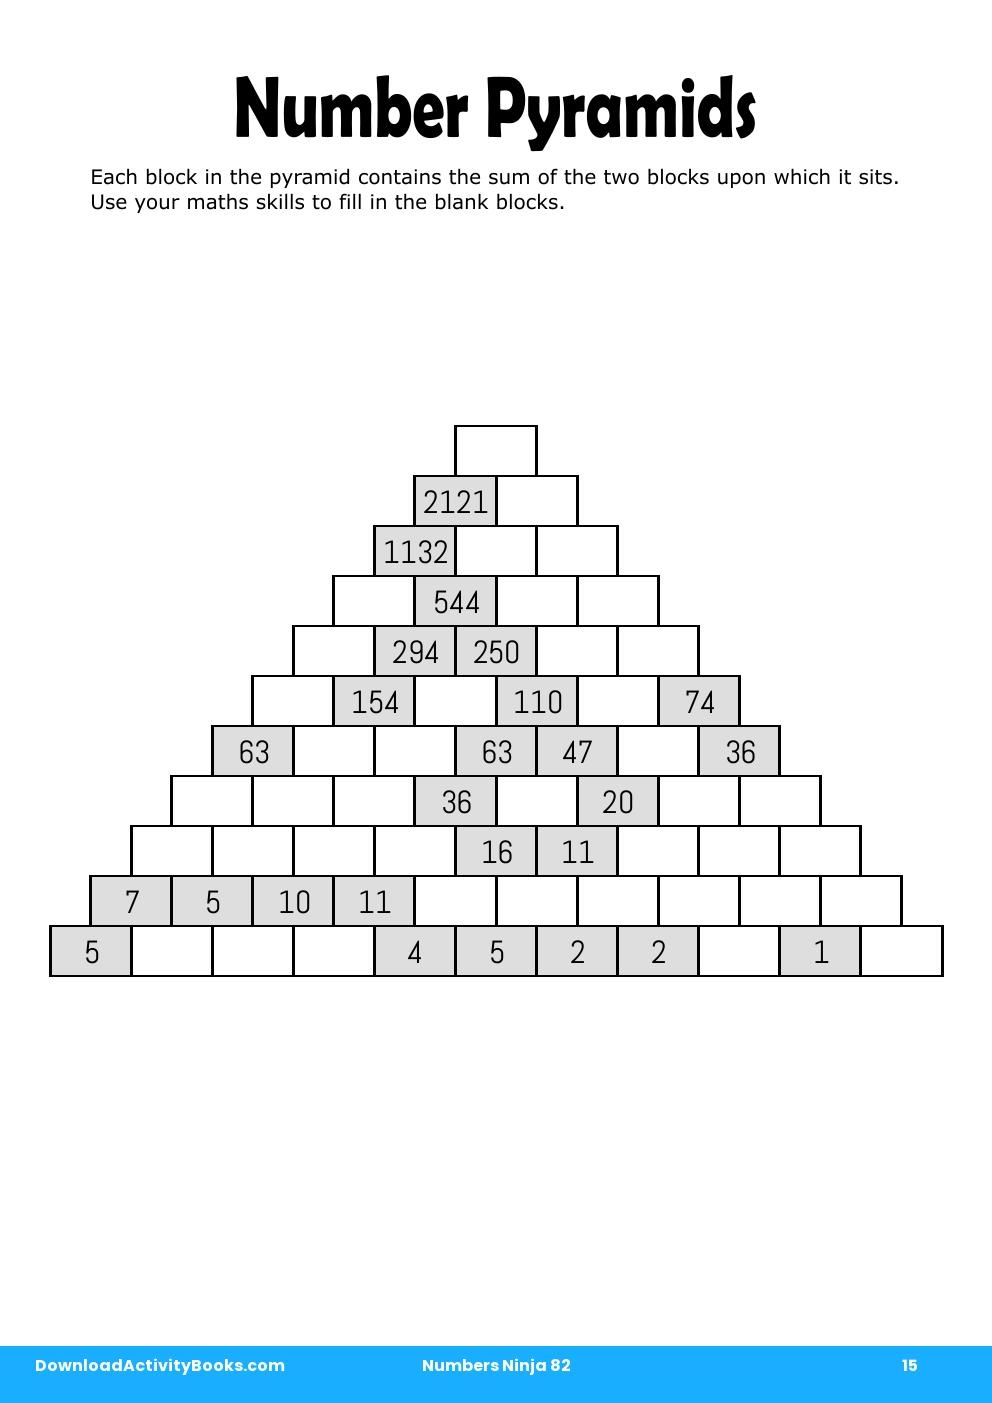 Number Pyramids in Numbers Ninja 82